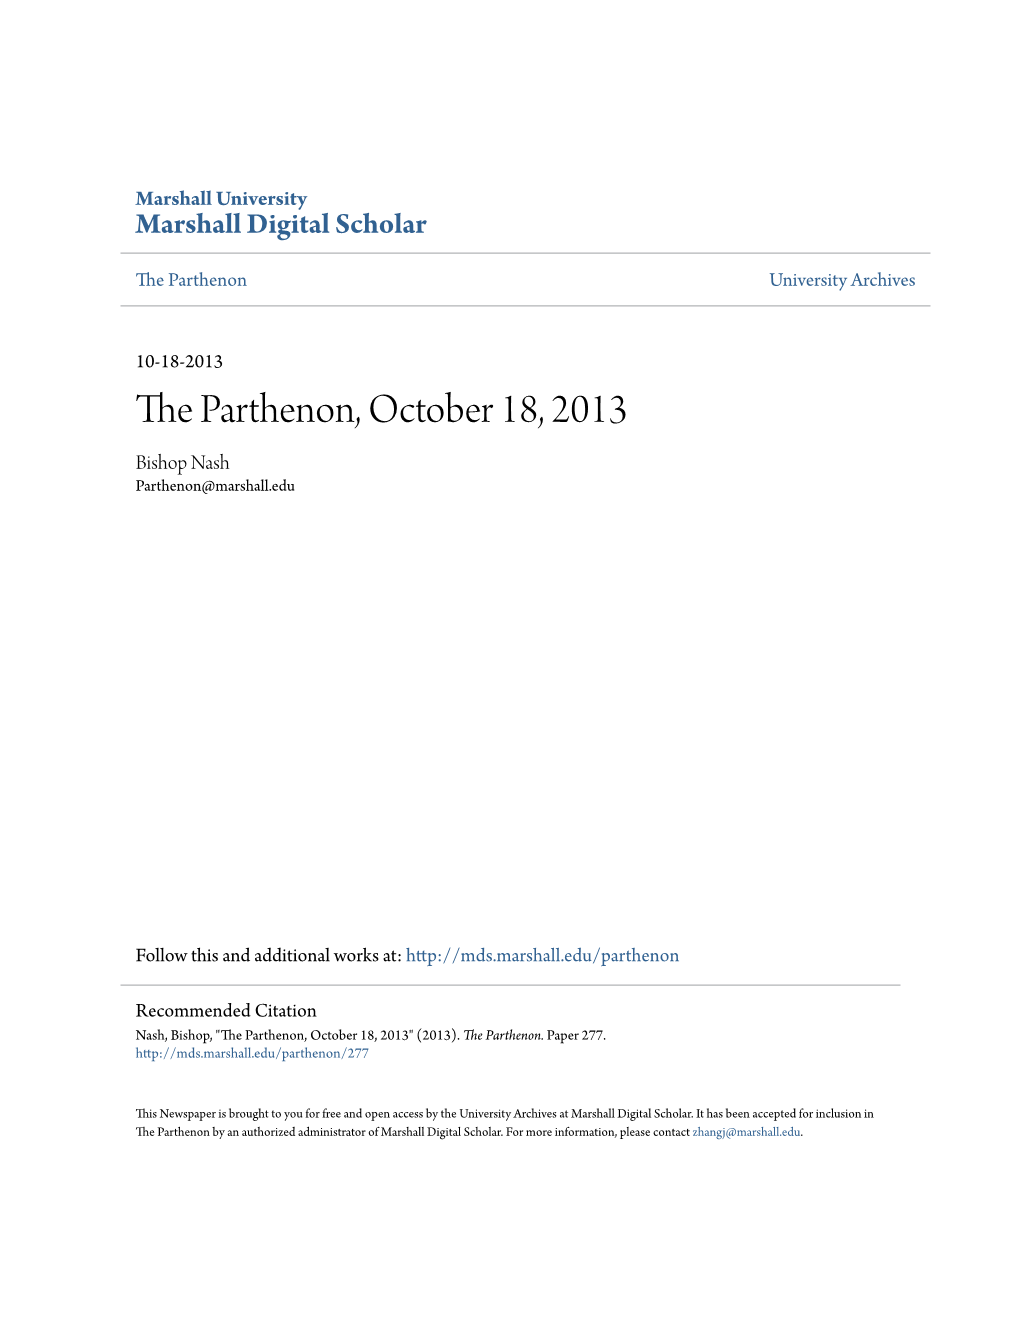 The Parthenon, October 18, 2013